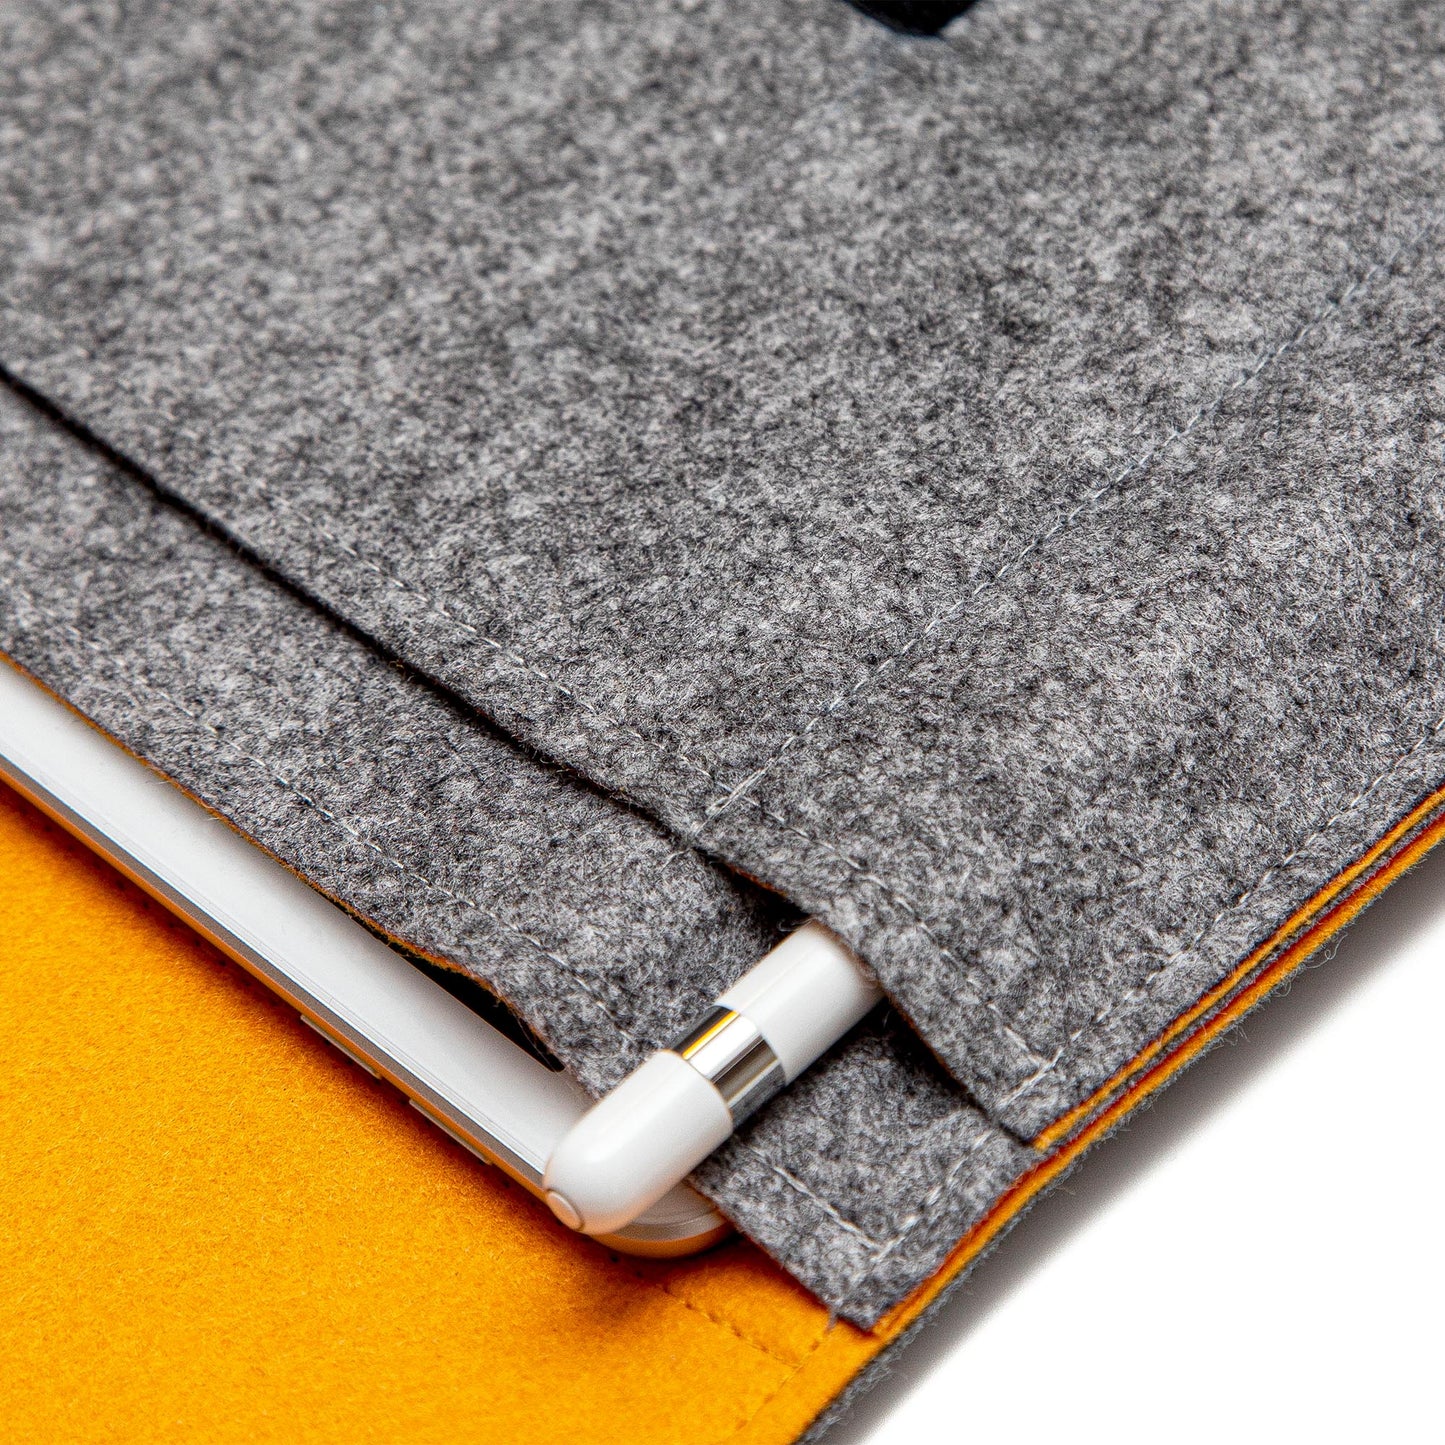 Premium Felt iPad Cover: Ultimate Protection with Accessories Pocket - Grey & Light Orange